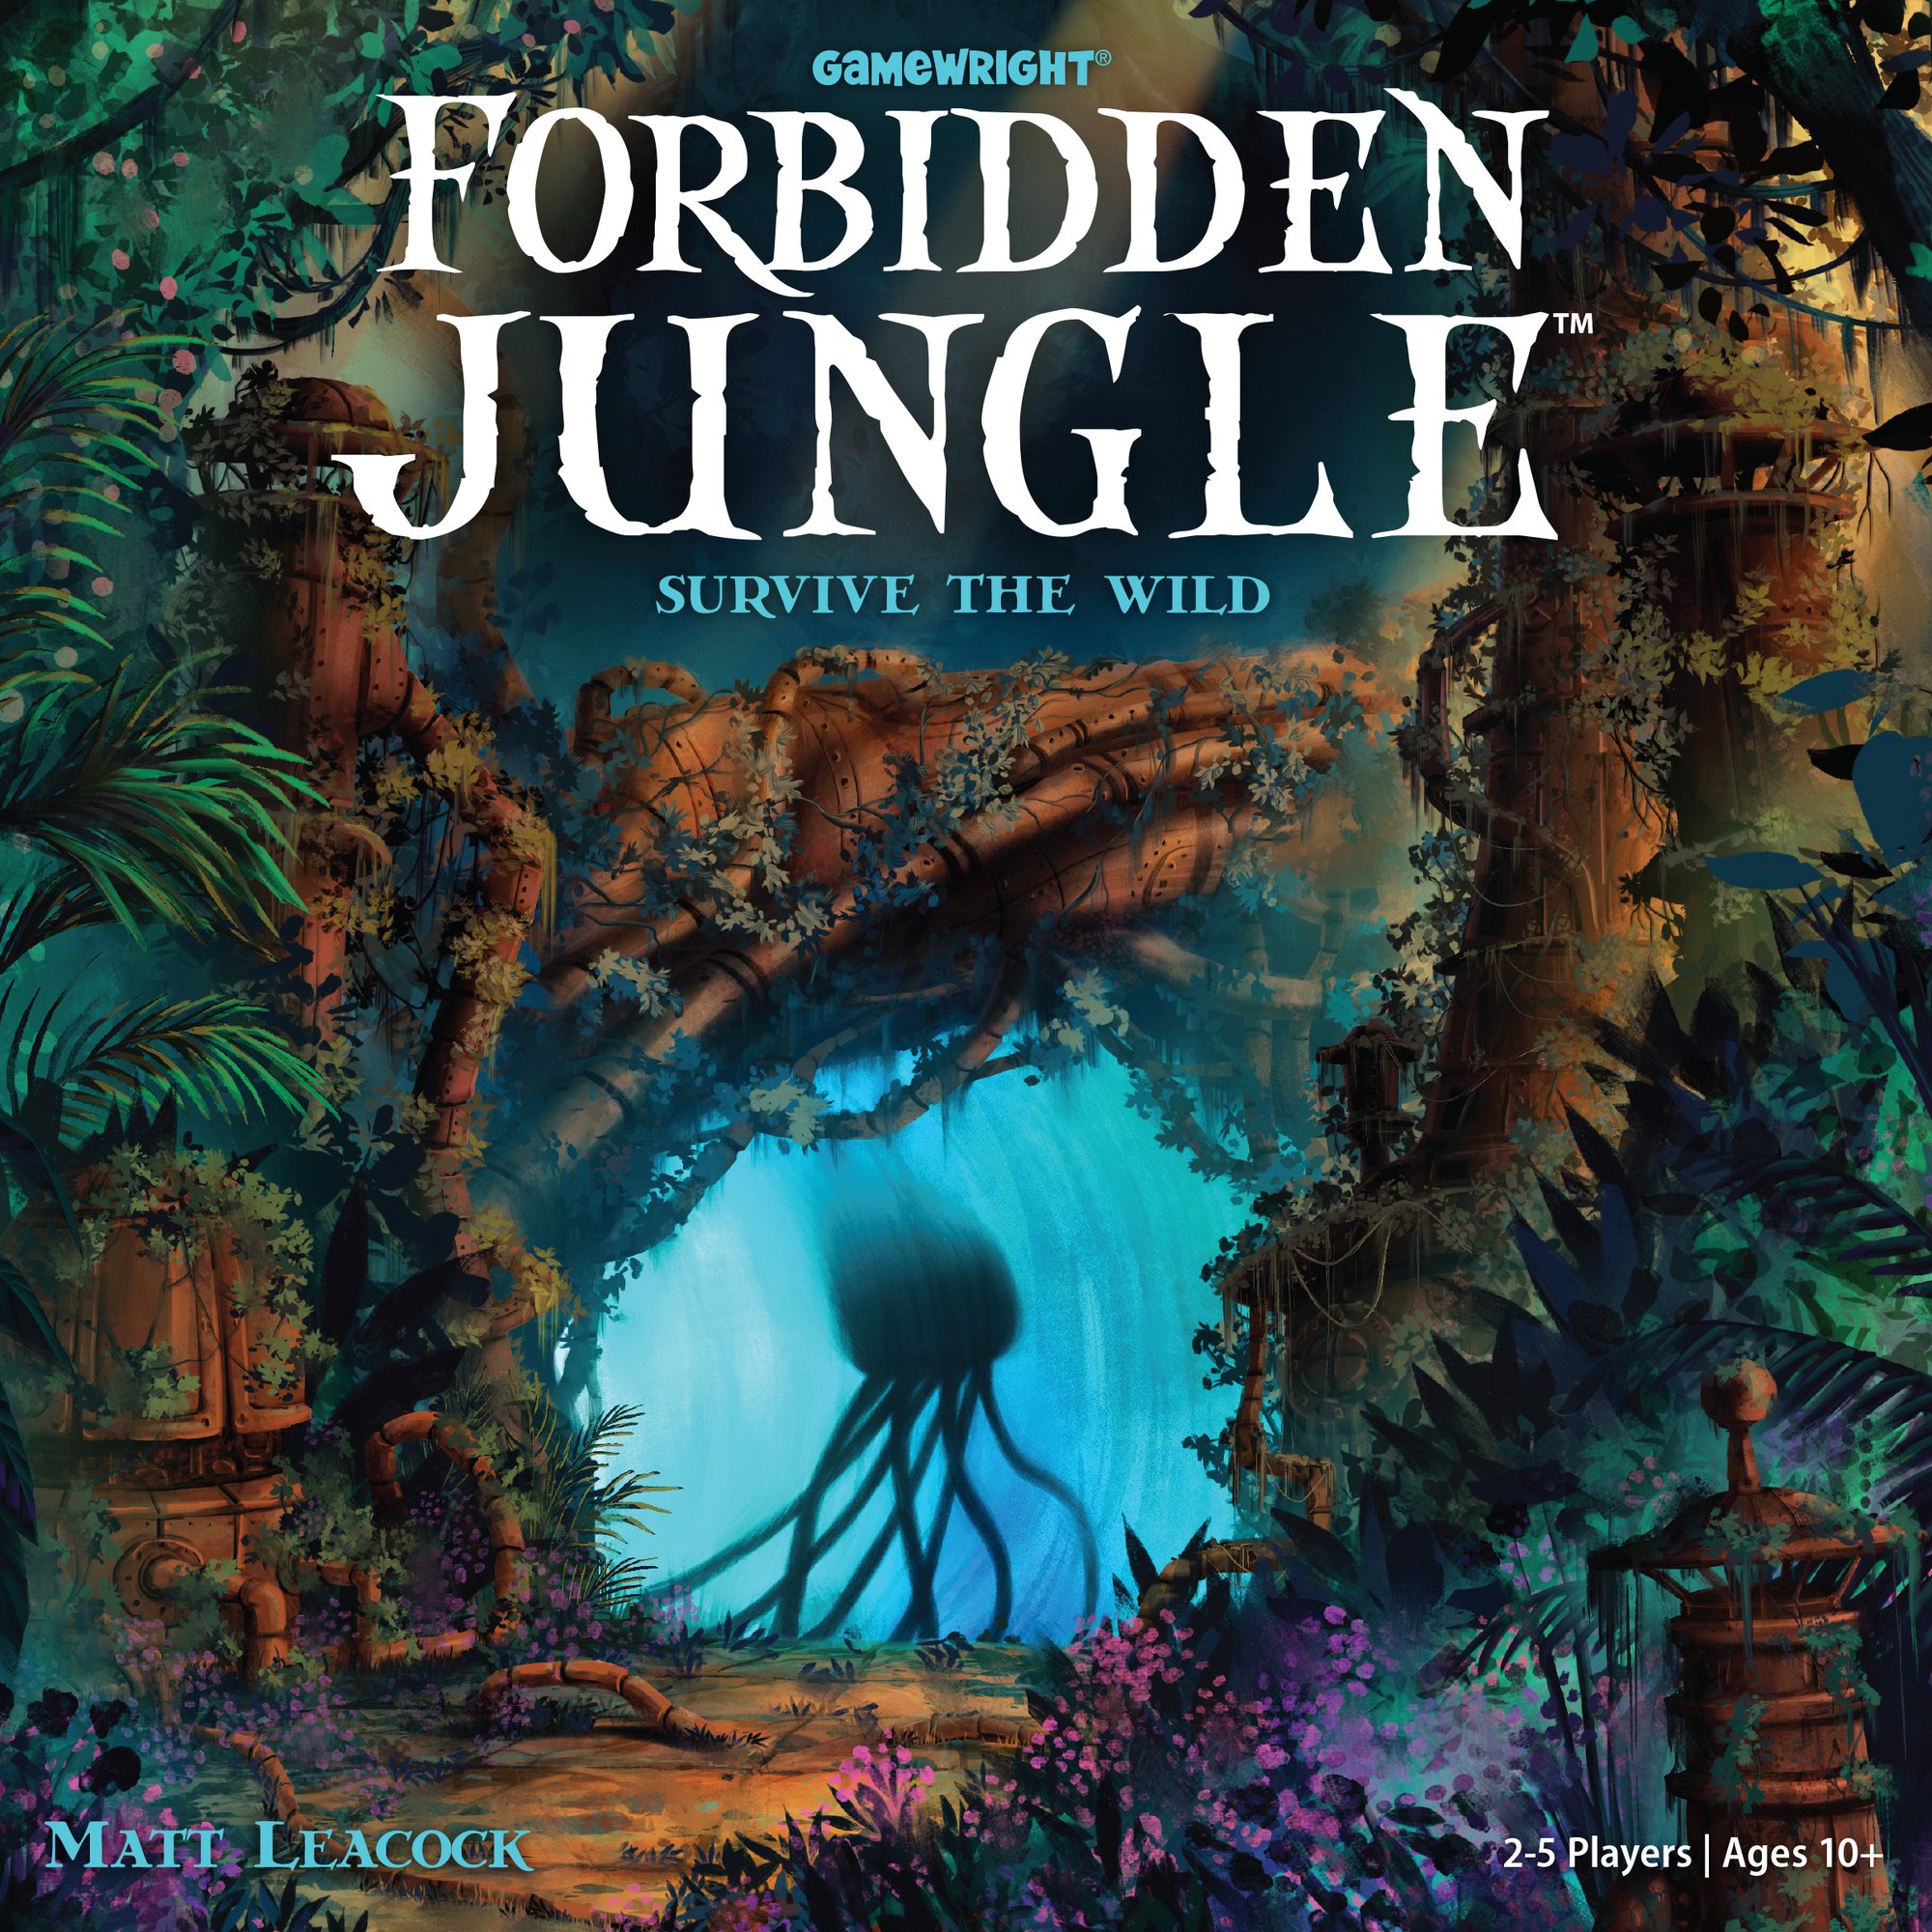 Forbidden Island - Modern Games